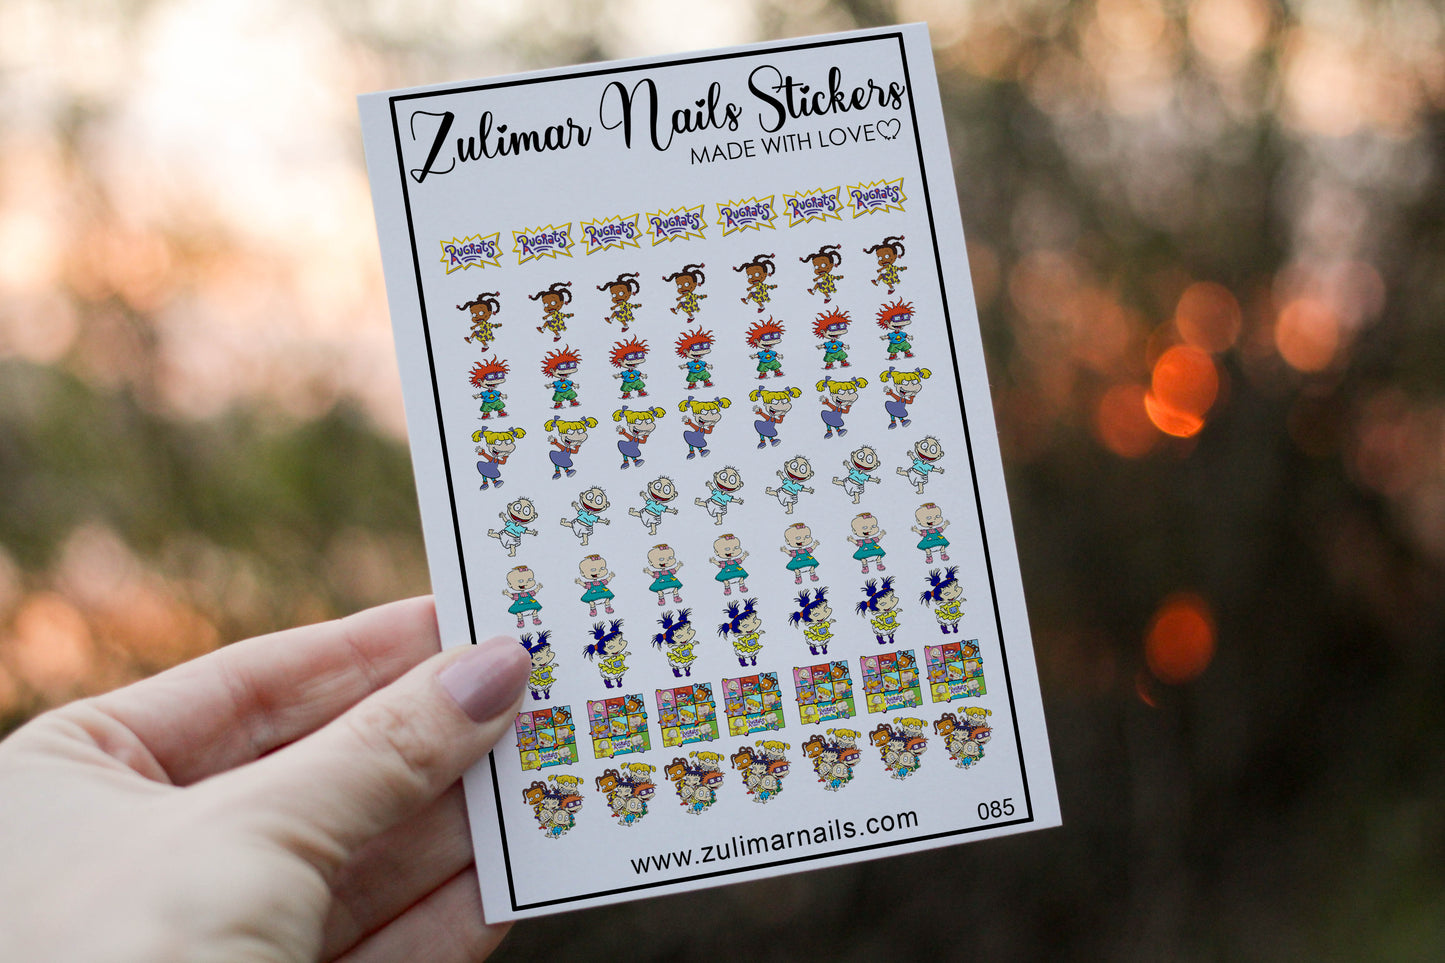 Zulimar Nails Stickers